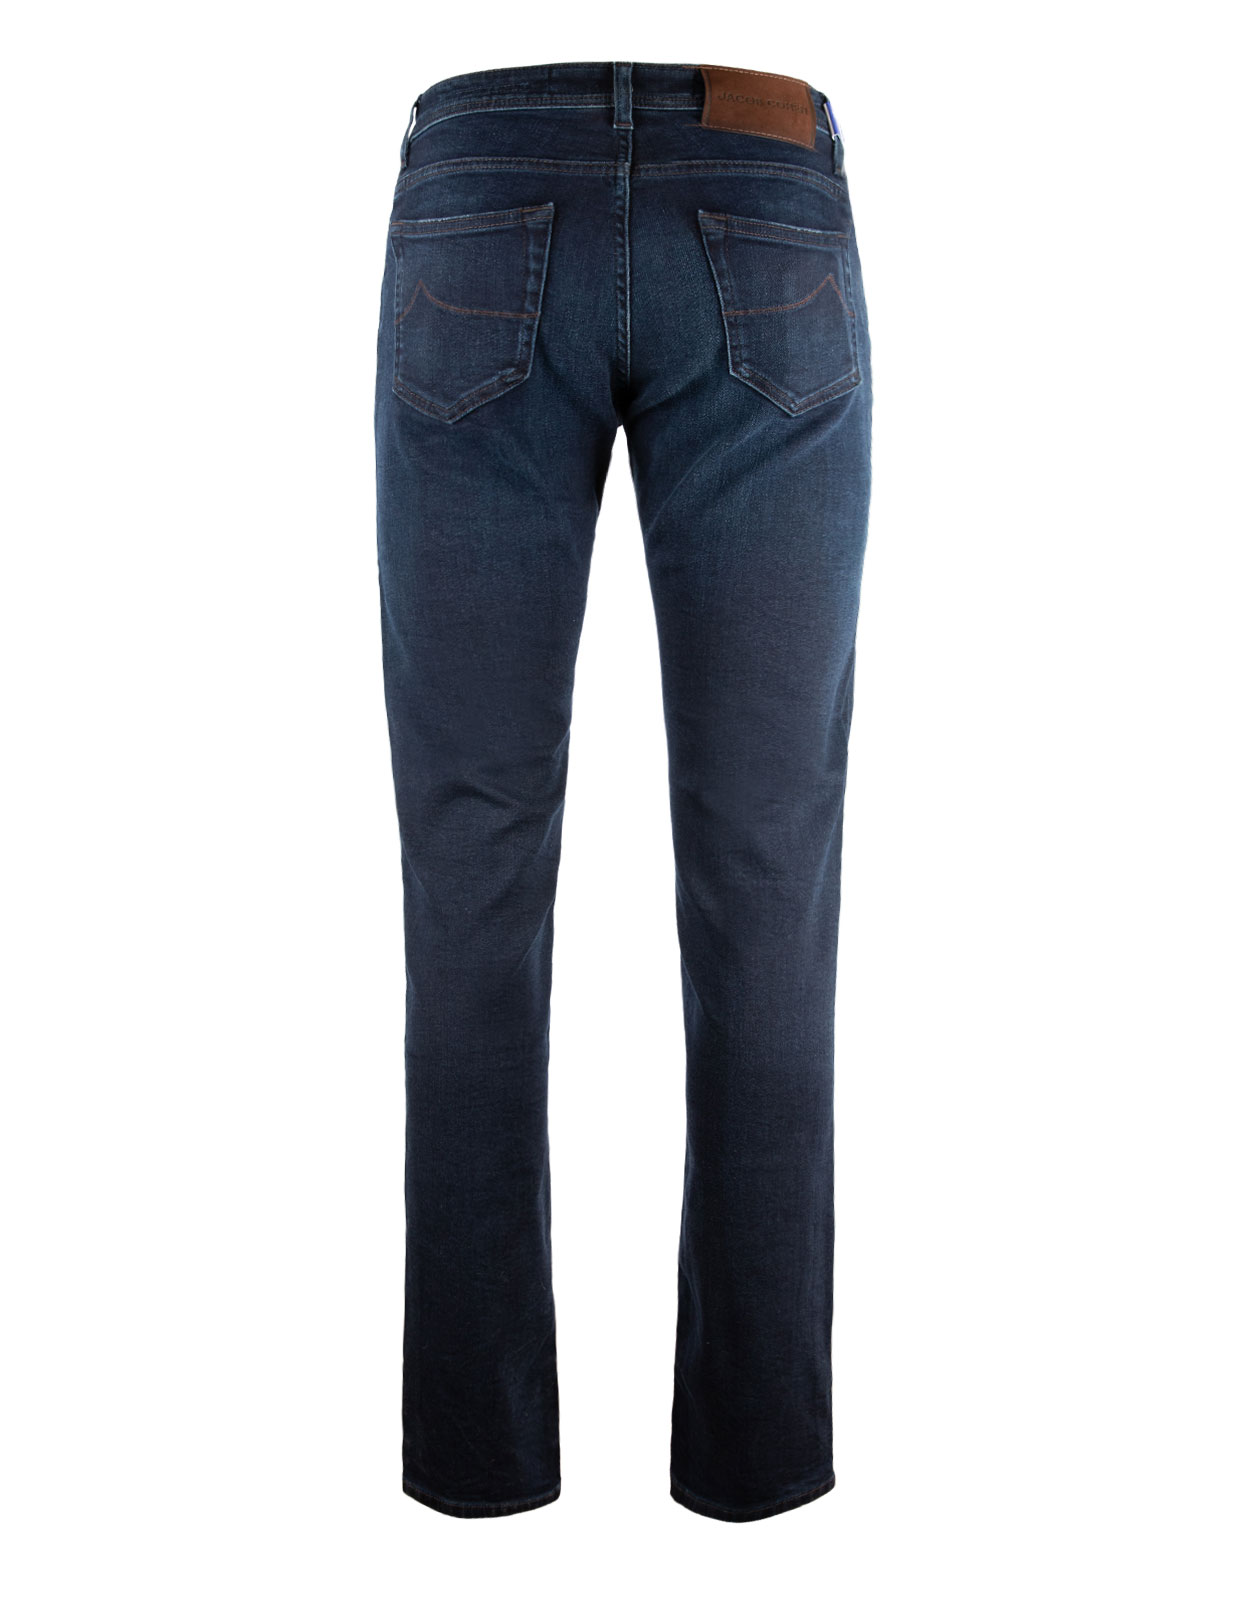 Nick J622 Jeans Denim Stretch Indigo Blue